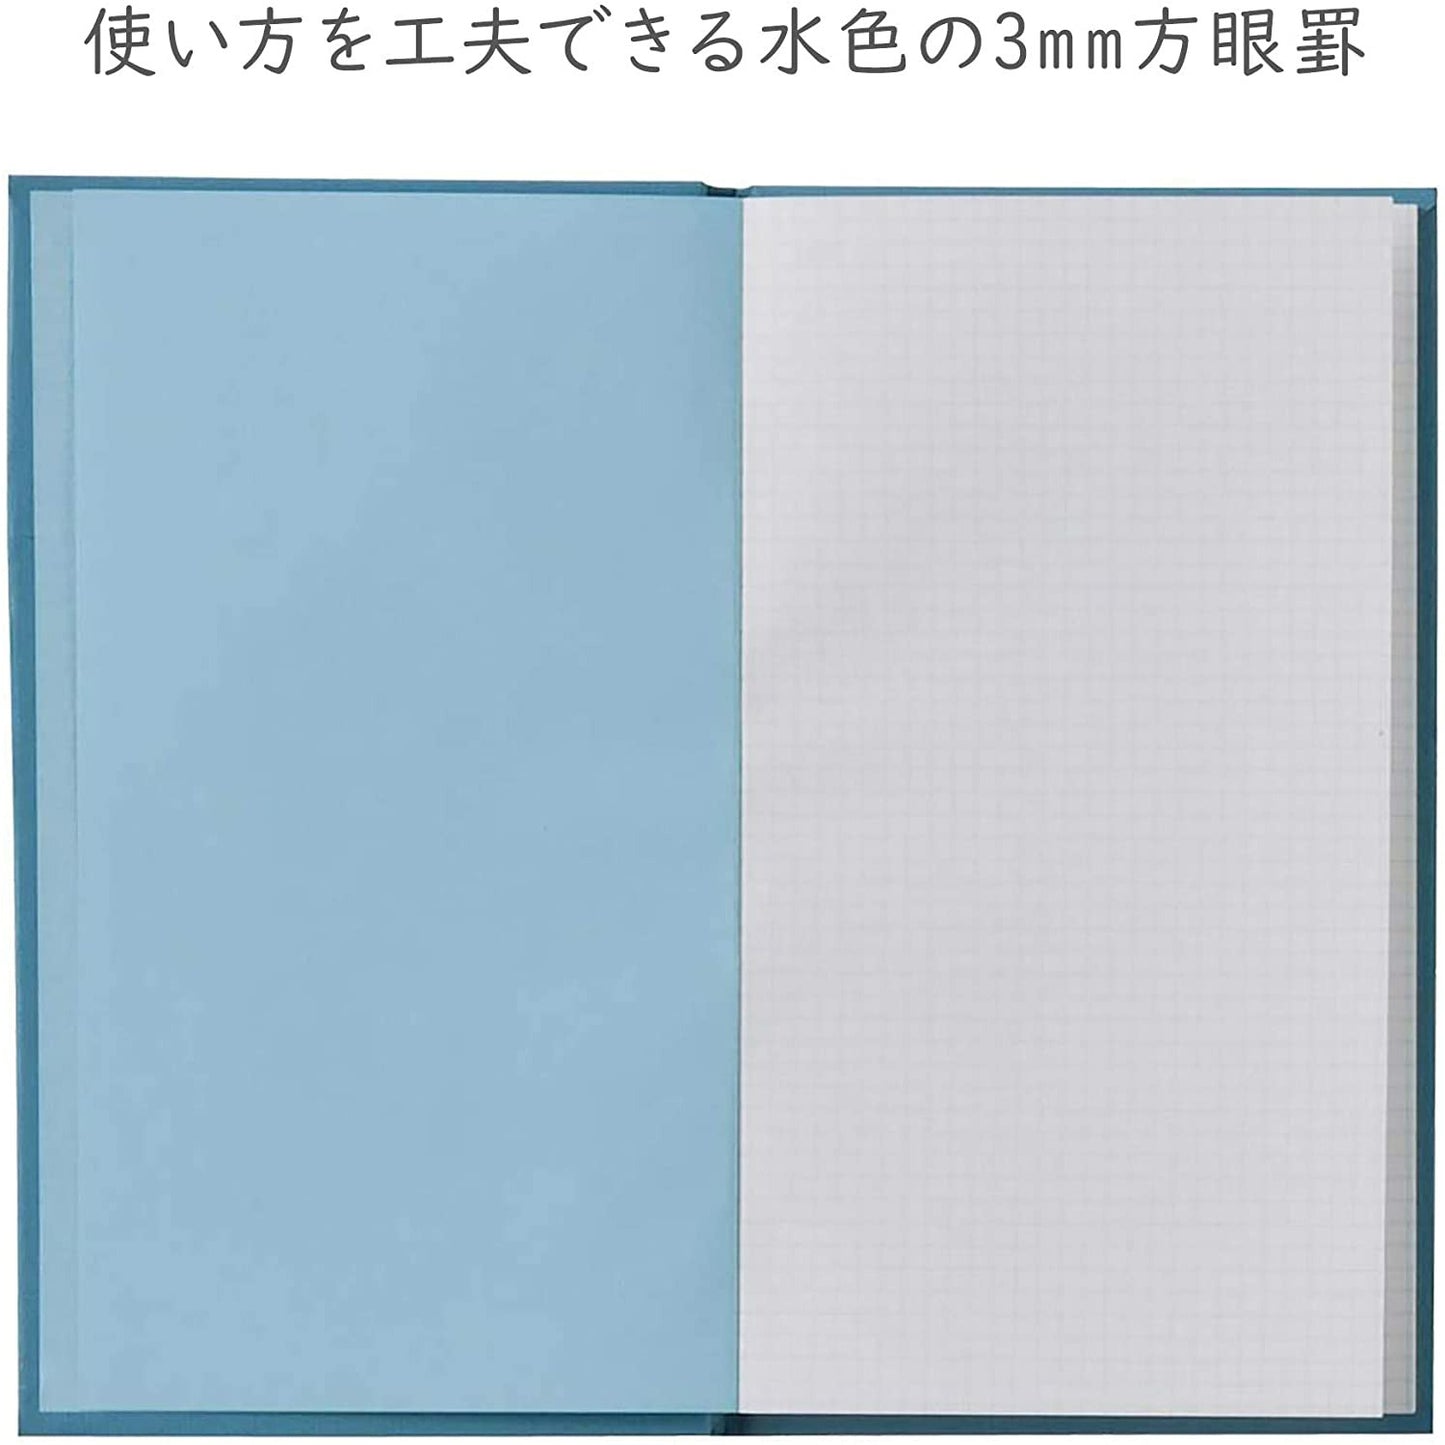 Field Note Sketch Book · Kokuyo